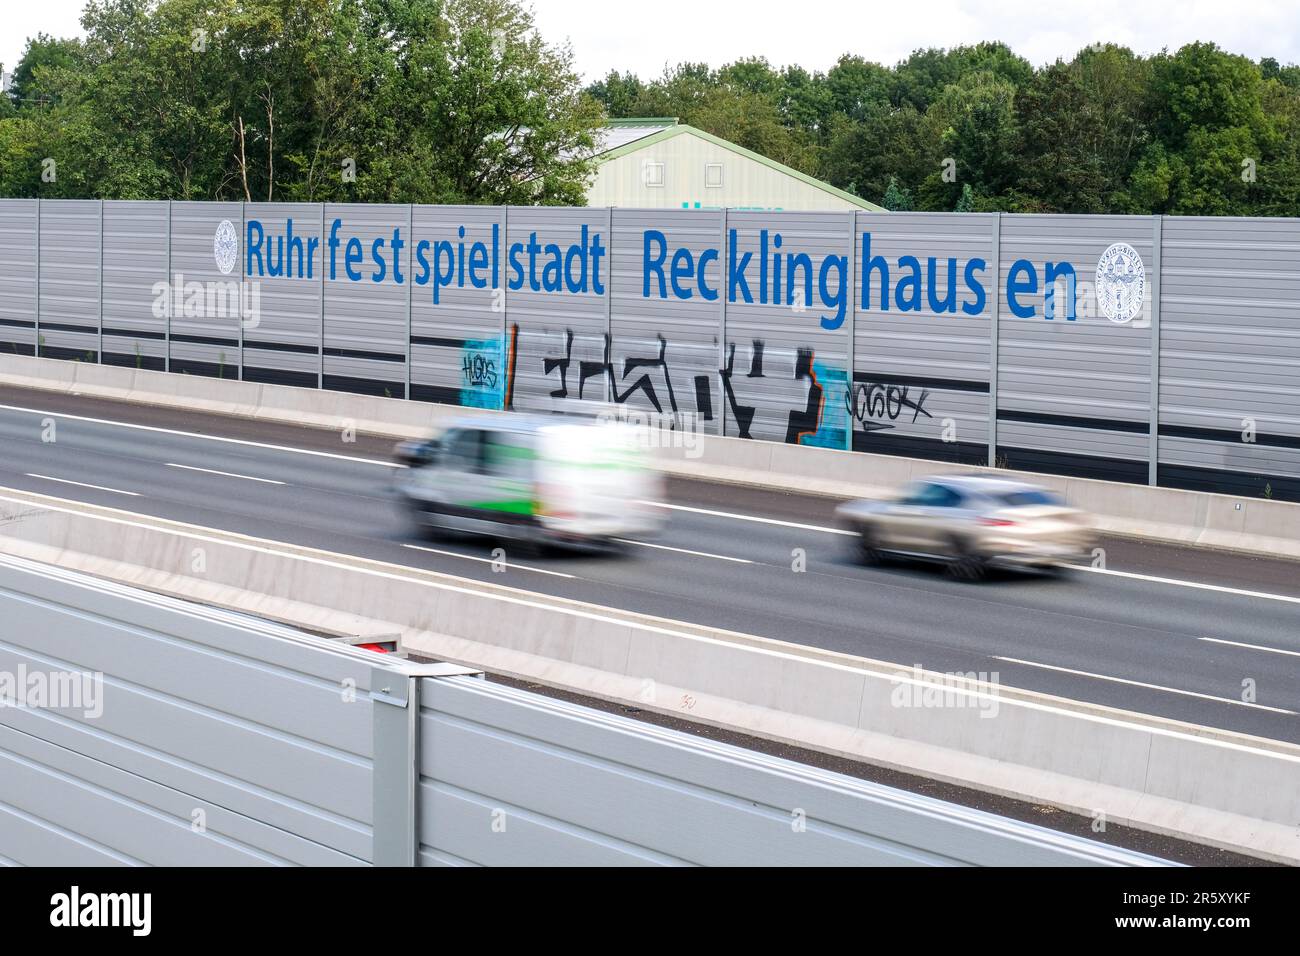 Motorway A43 Recklinghausen, Ruhrfestspielstadt is written in blue letters on the noise barriers, North Rhine-Westphalia, Germany Stock Photo